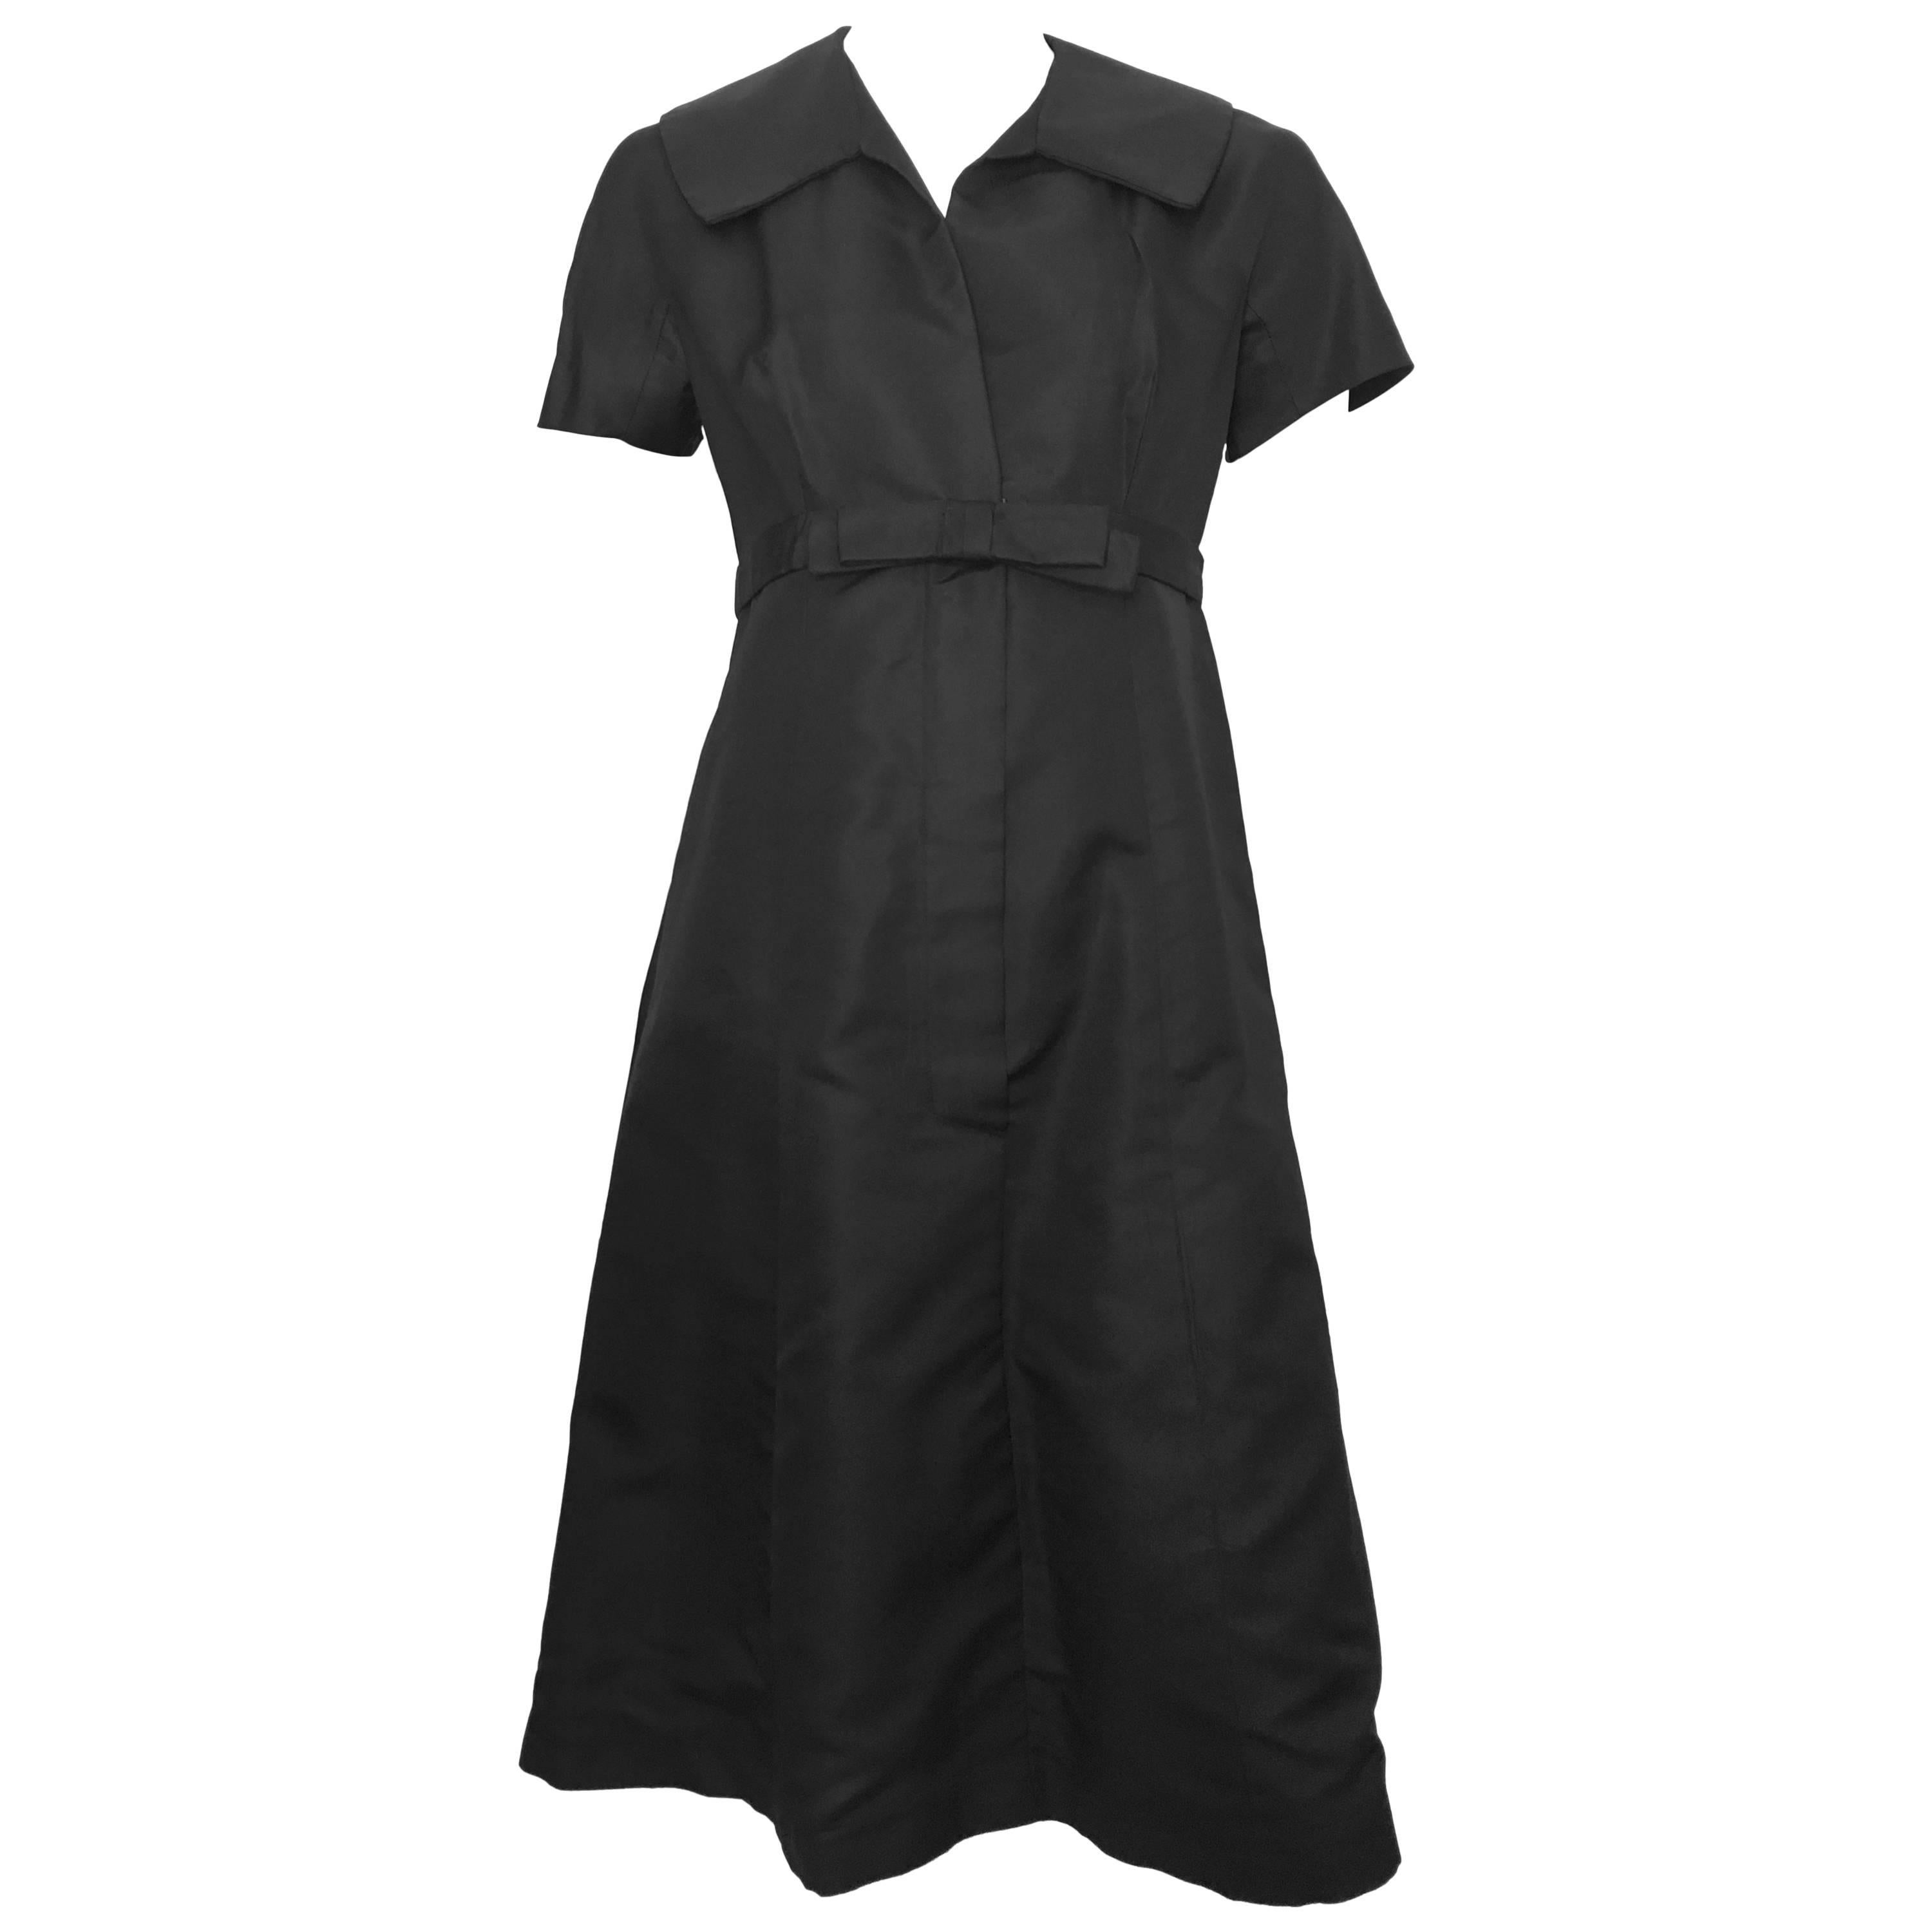 Malcolm Charles Black Silk Taffeta Dress Size 6. For Sale